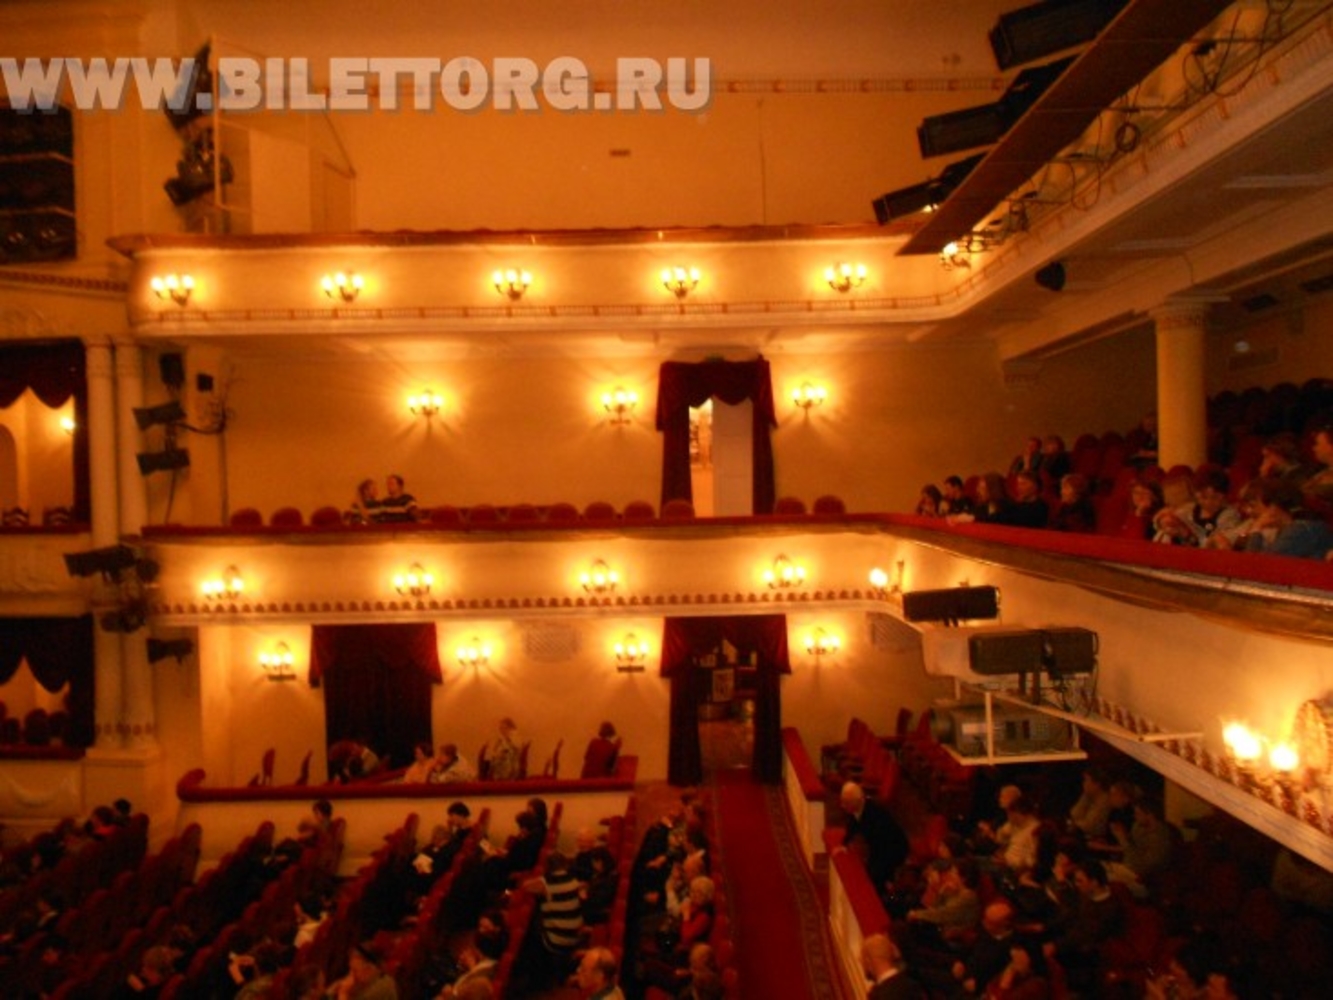 театр пушкина основная сцена схема зала